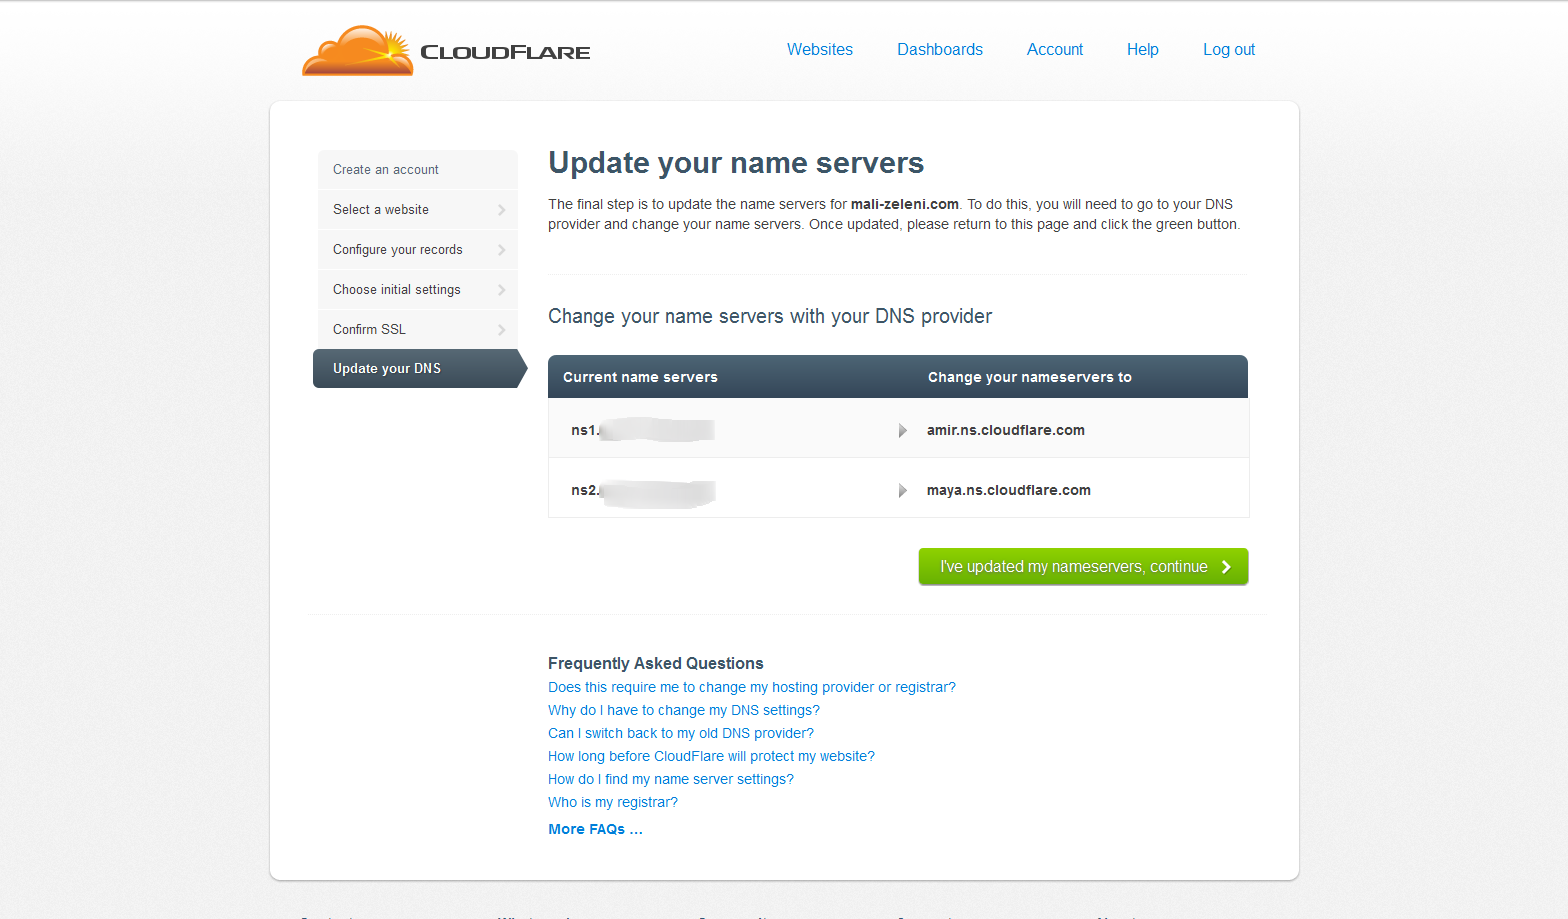 Cloudflare - Add a website